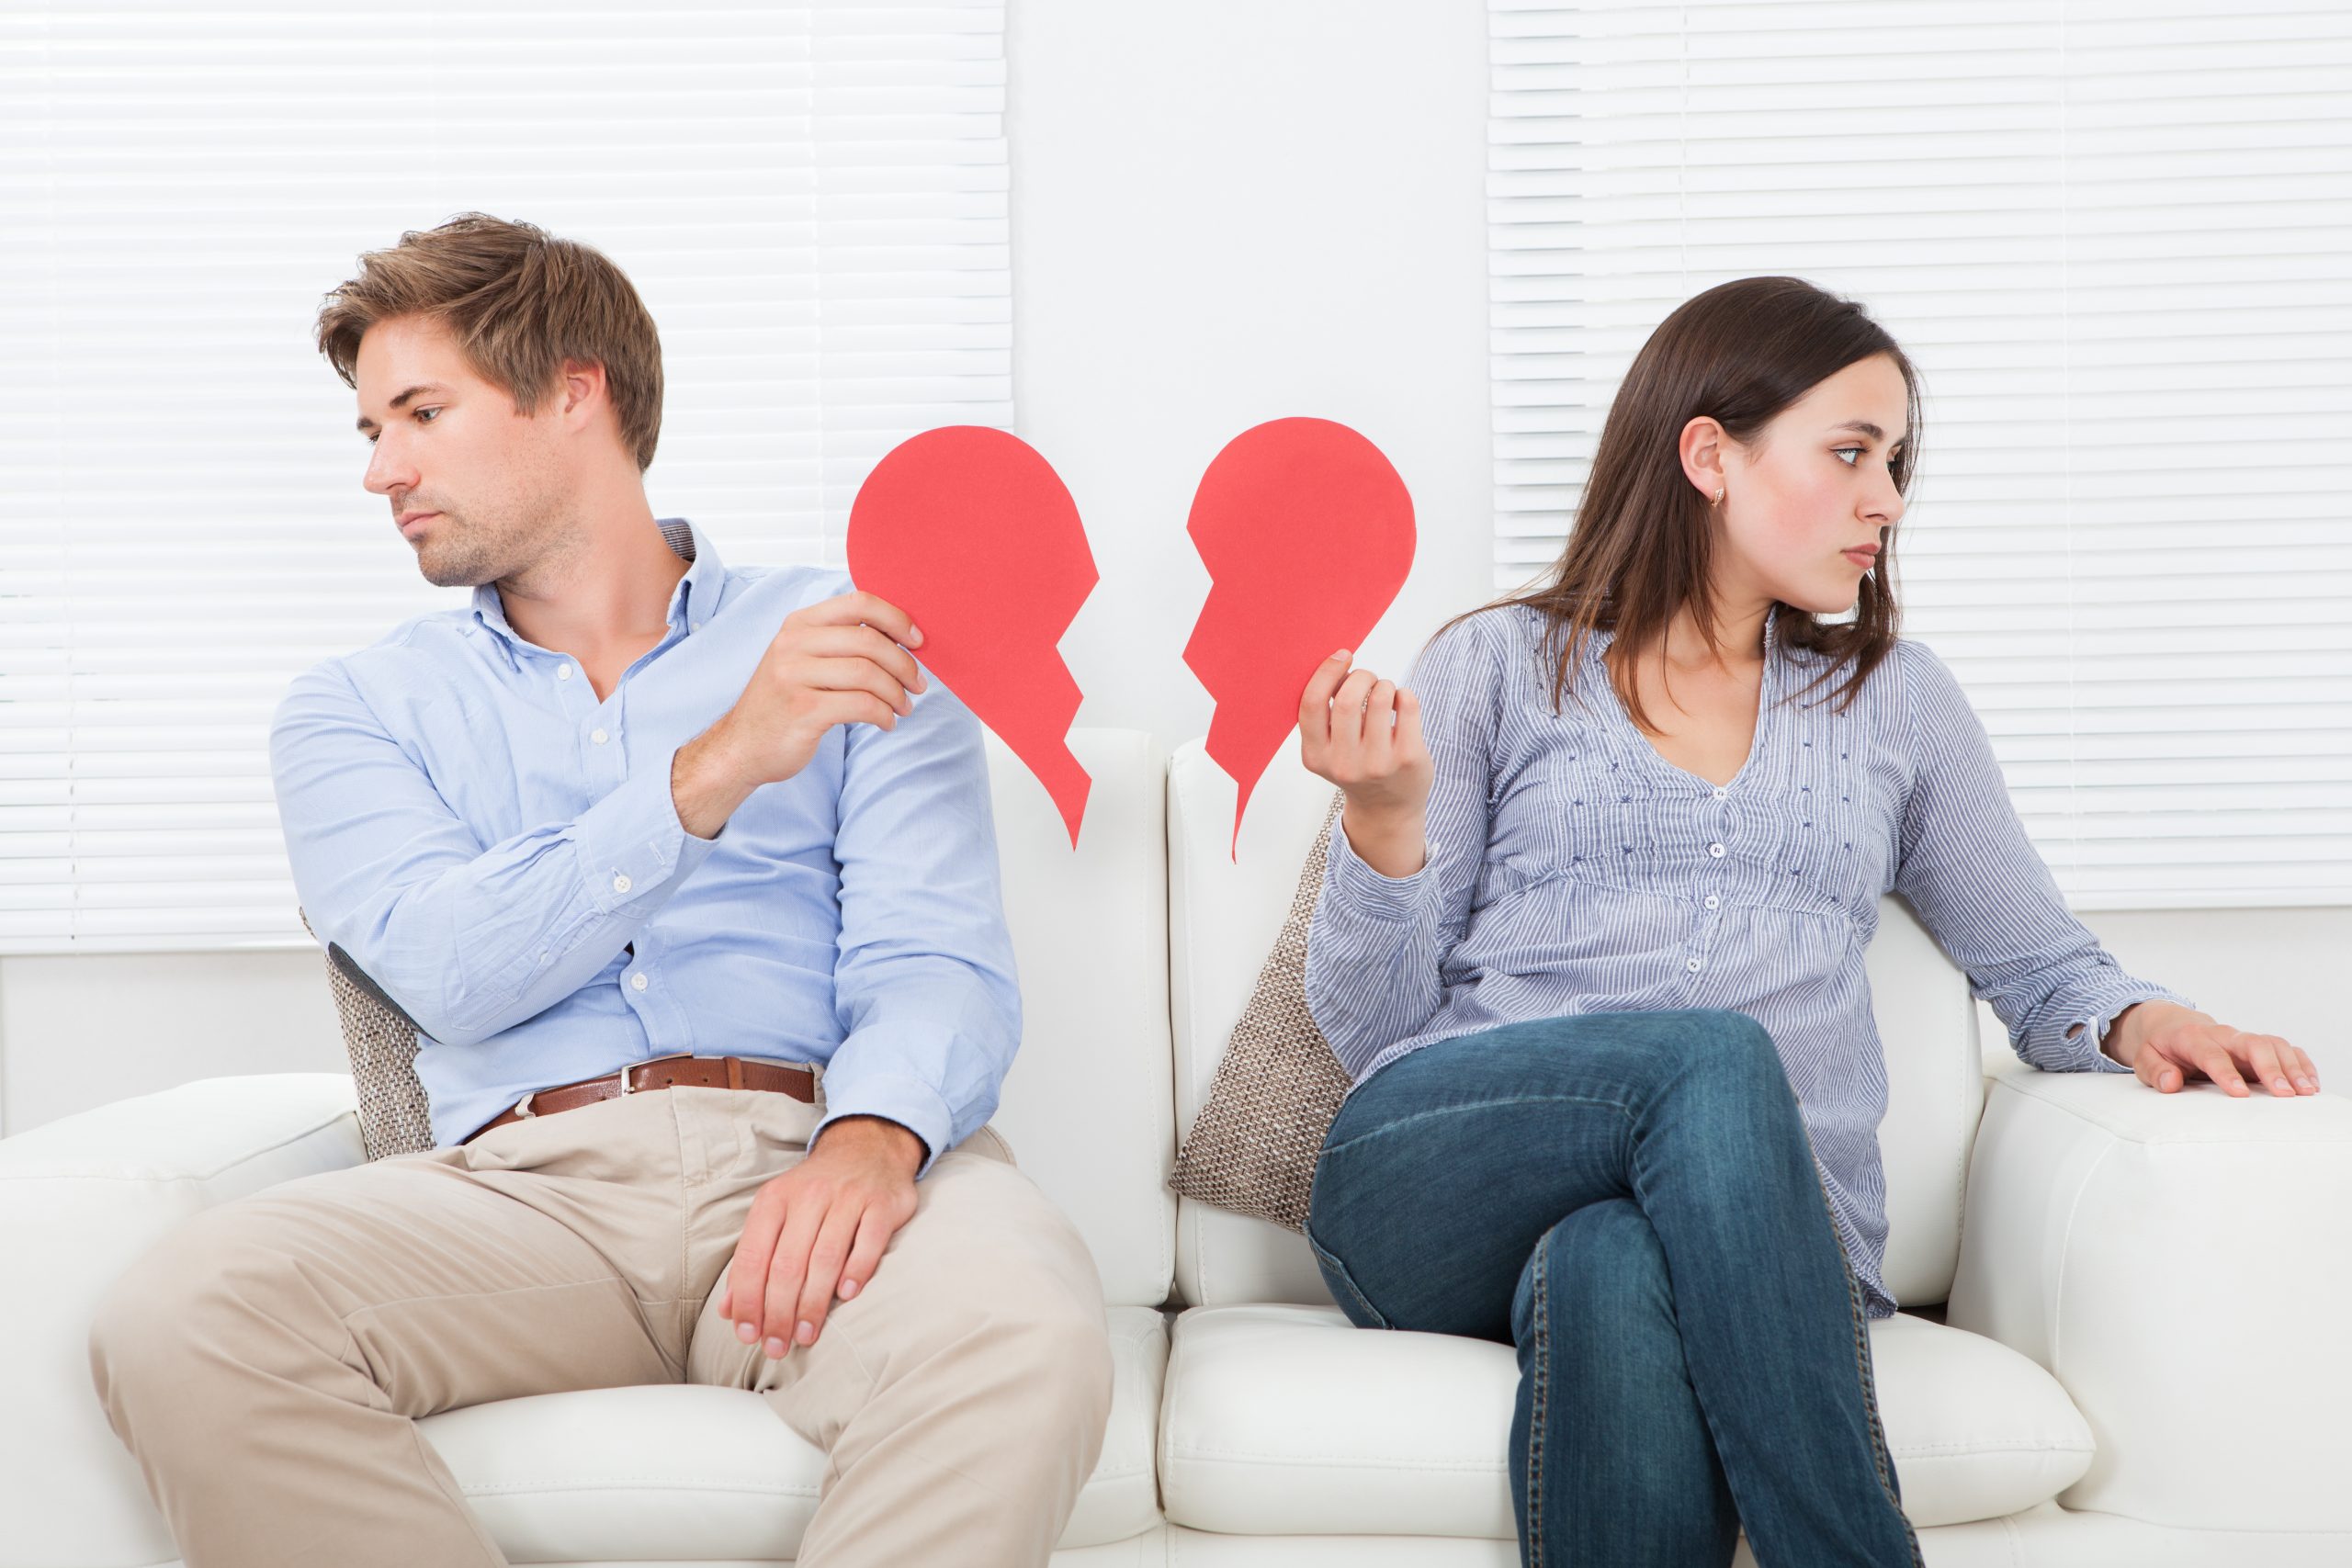 Lessen the Pain of Divorce